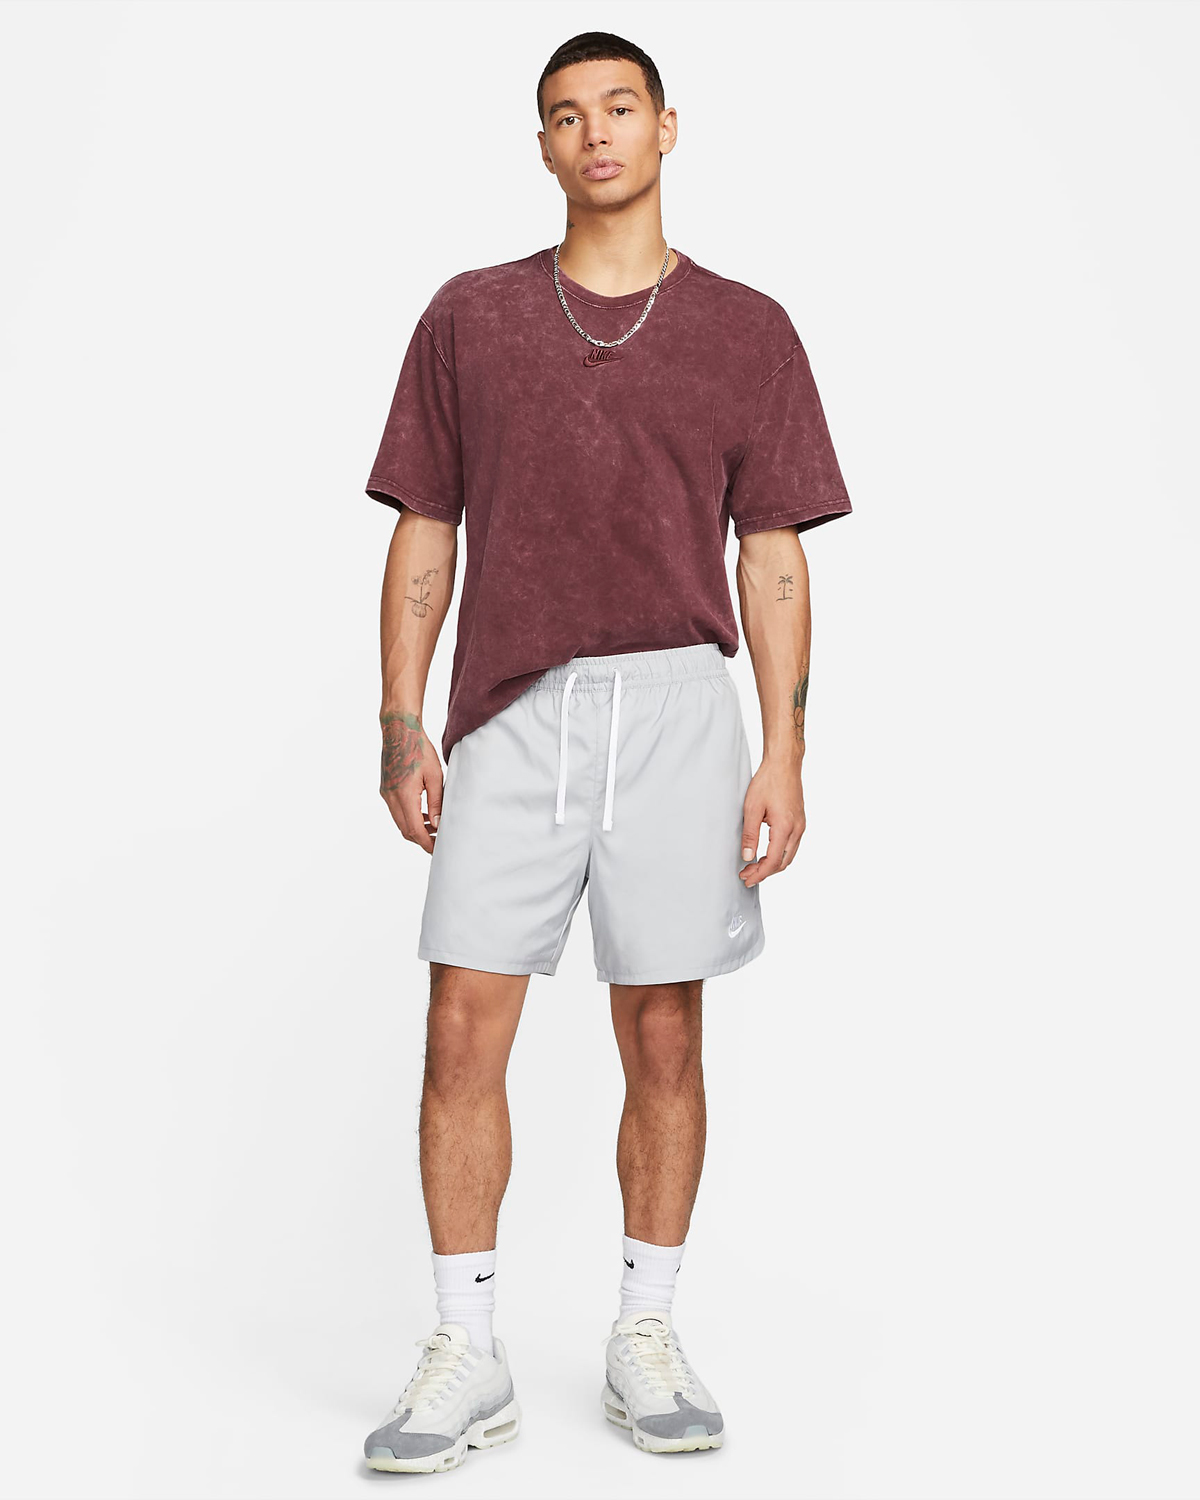 Nike-Sportswear-Max90-T-Shirt-Night-Maroon-Outfit